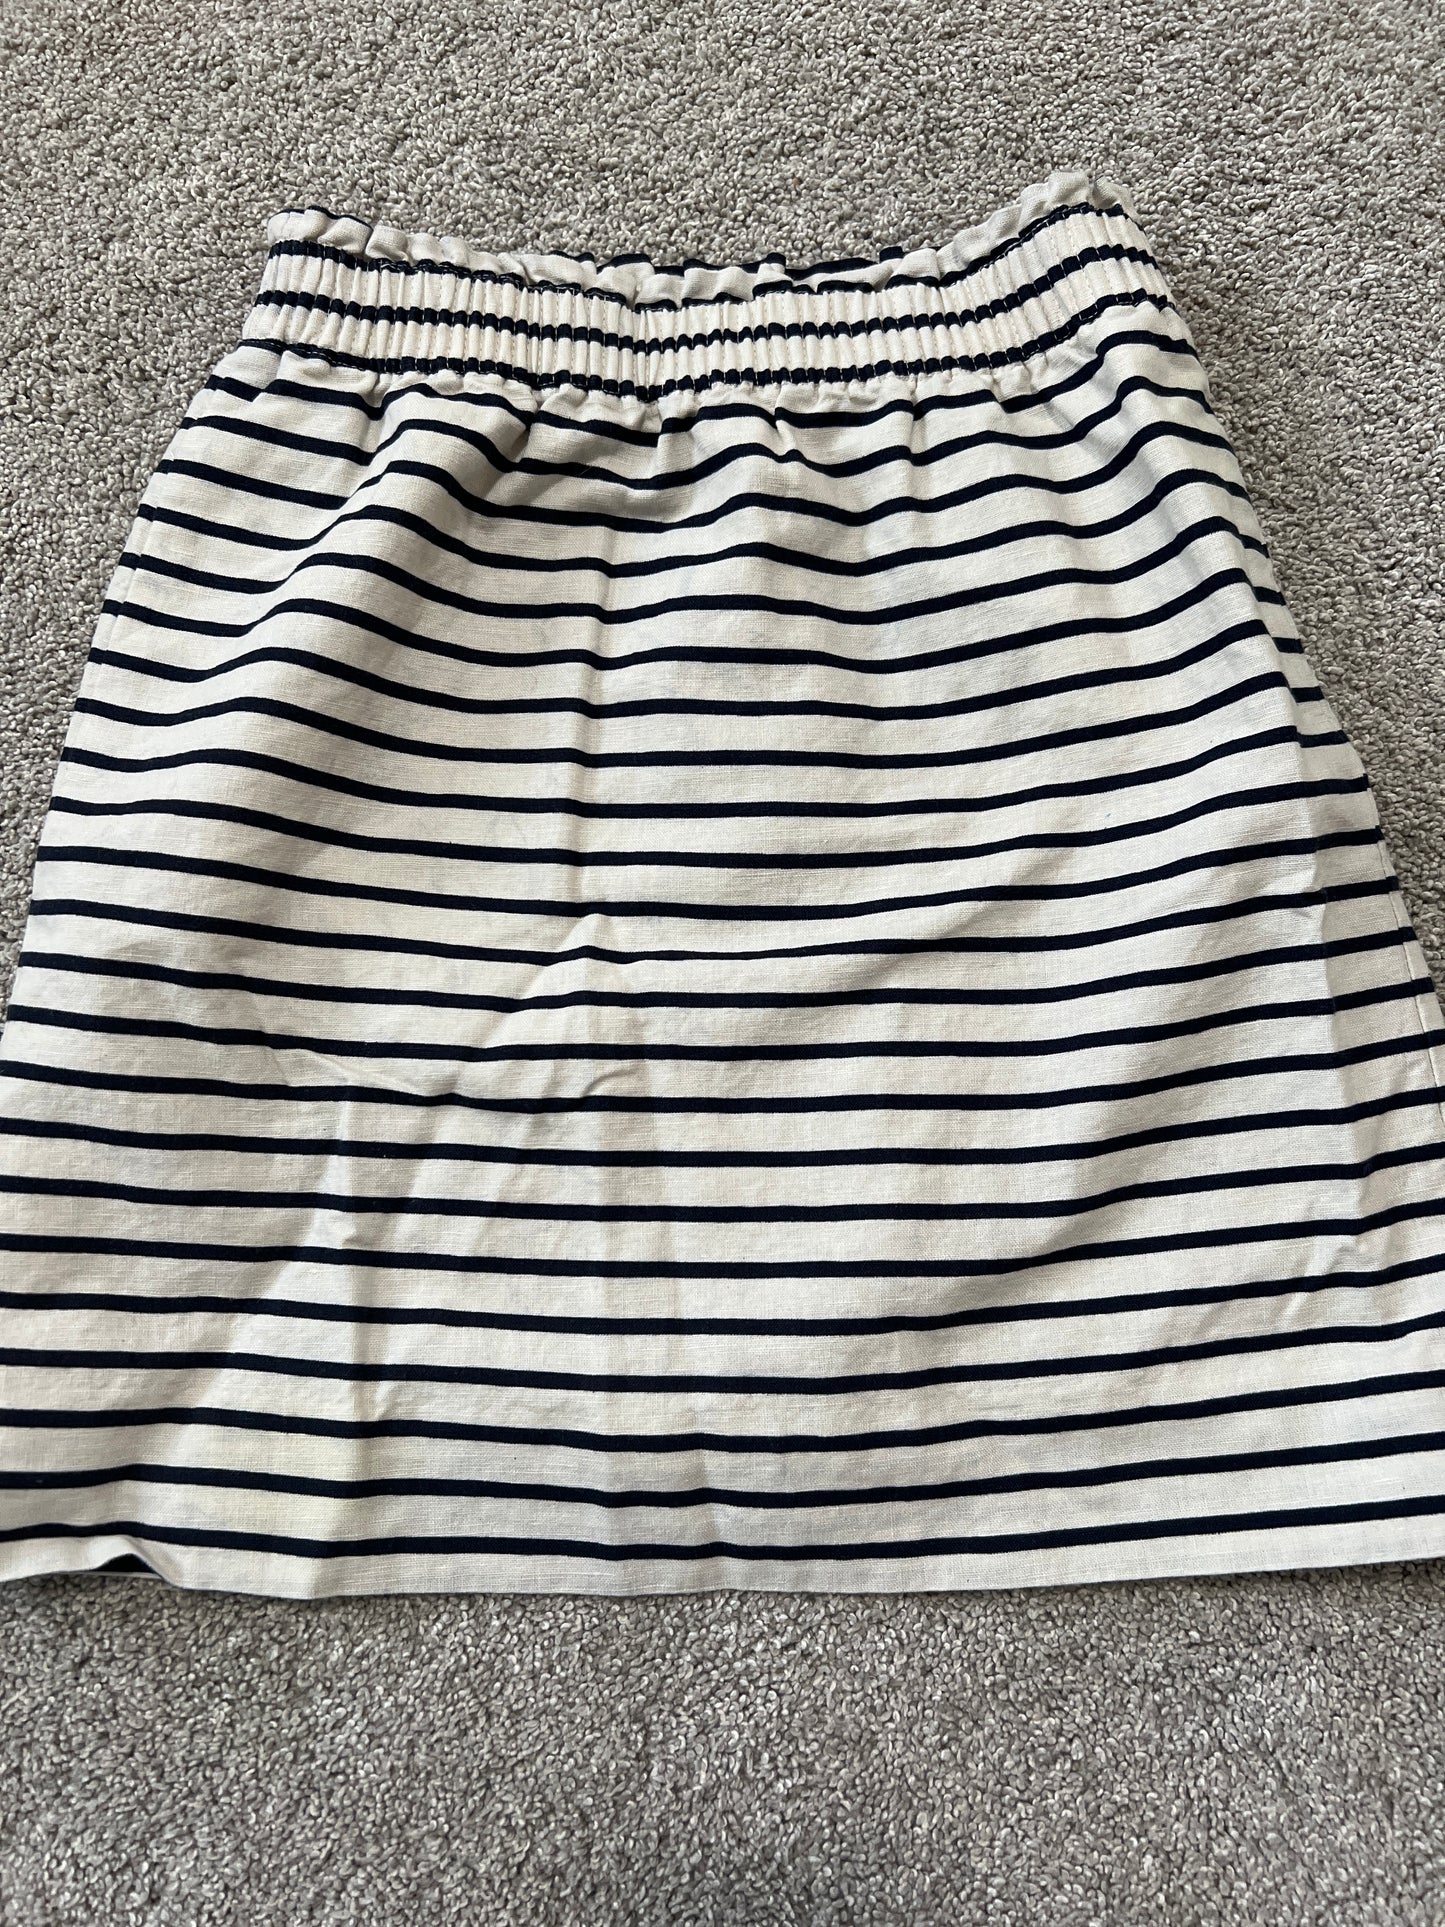 J. Crew Elastic Waist Striped Skirt Sized 0